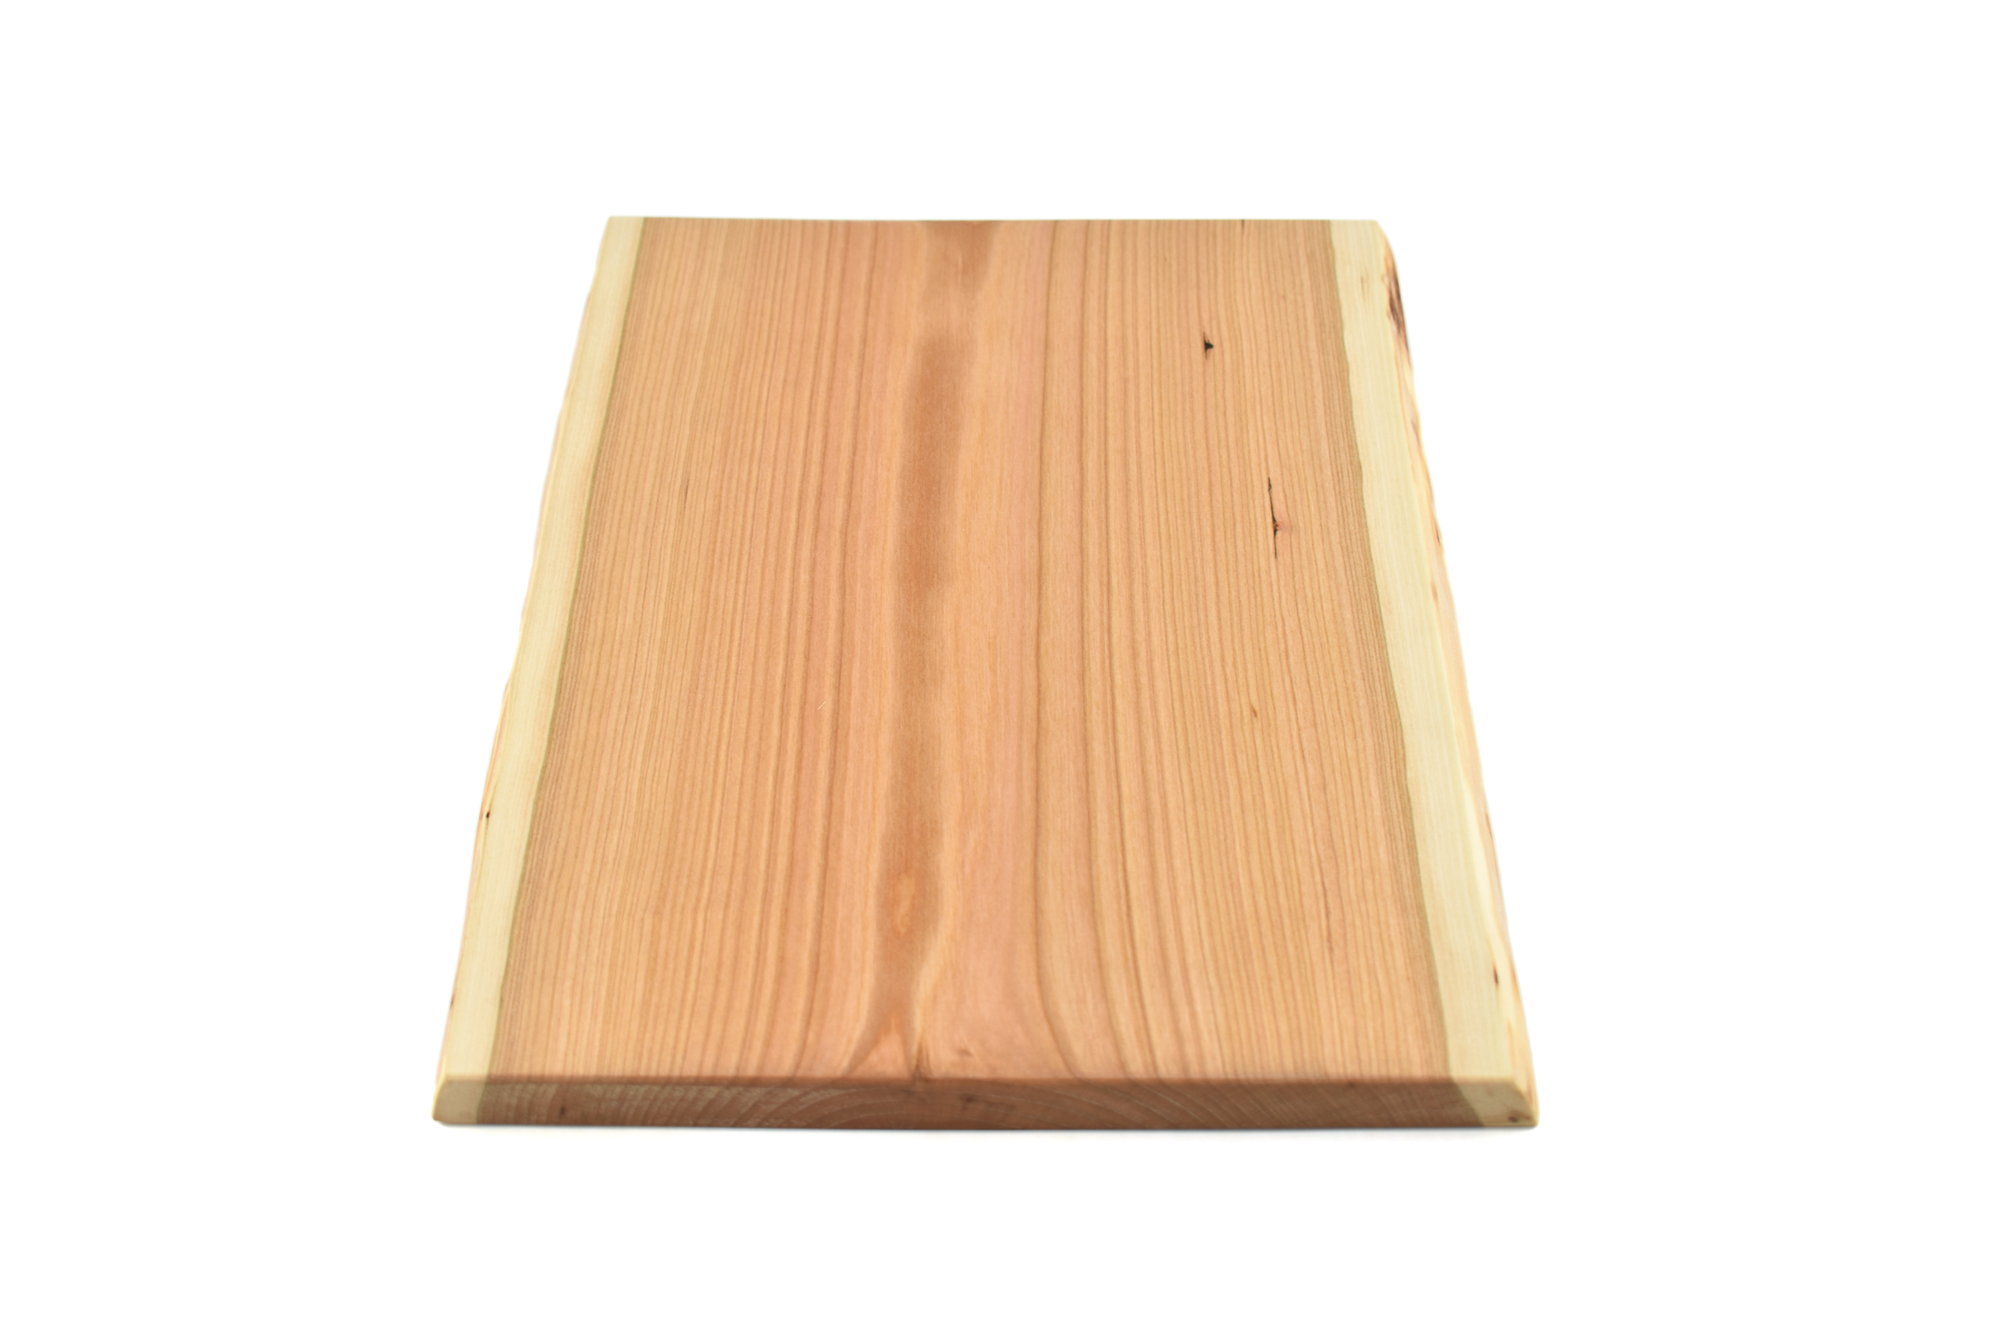 Small live edge rectangular wood serving board